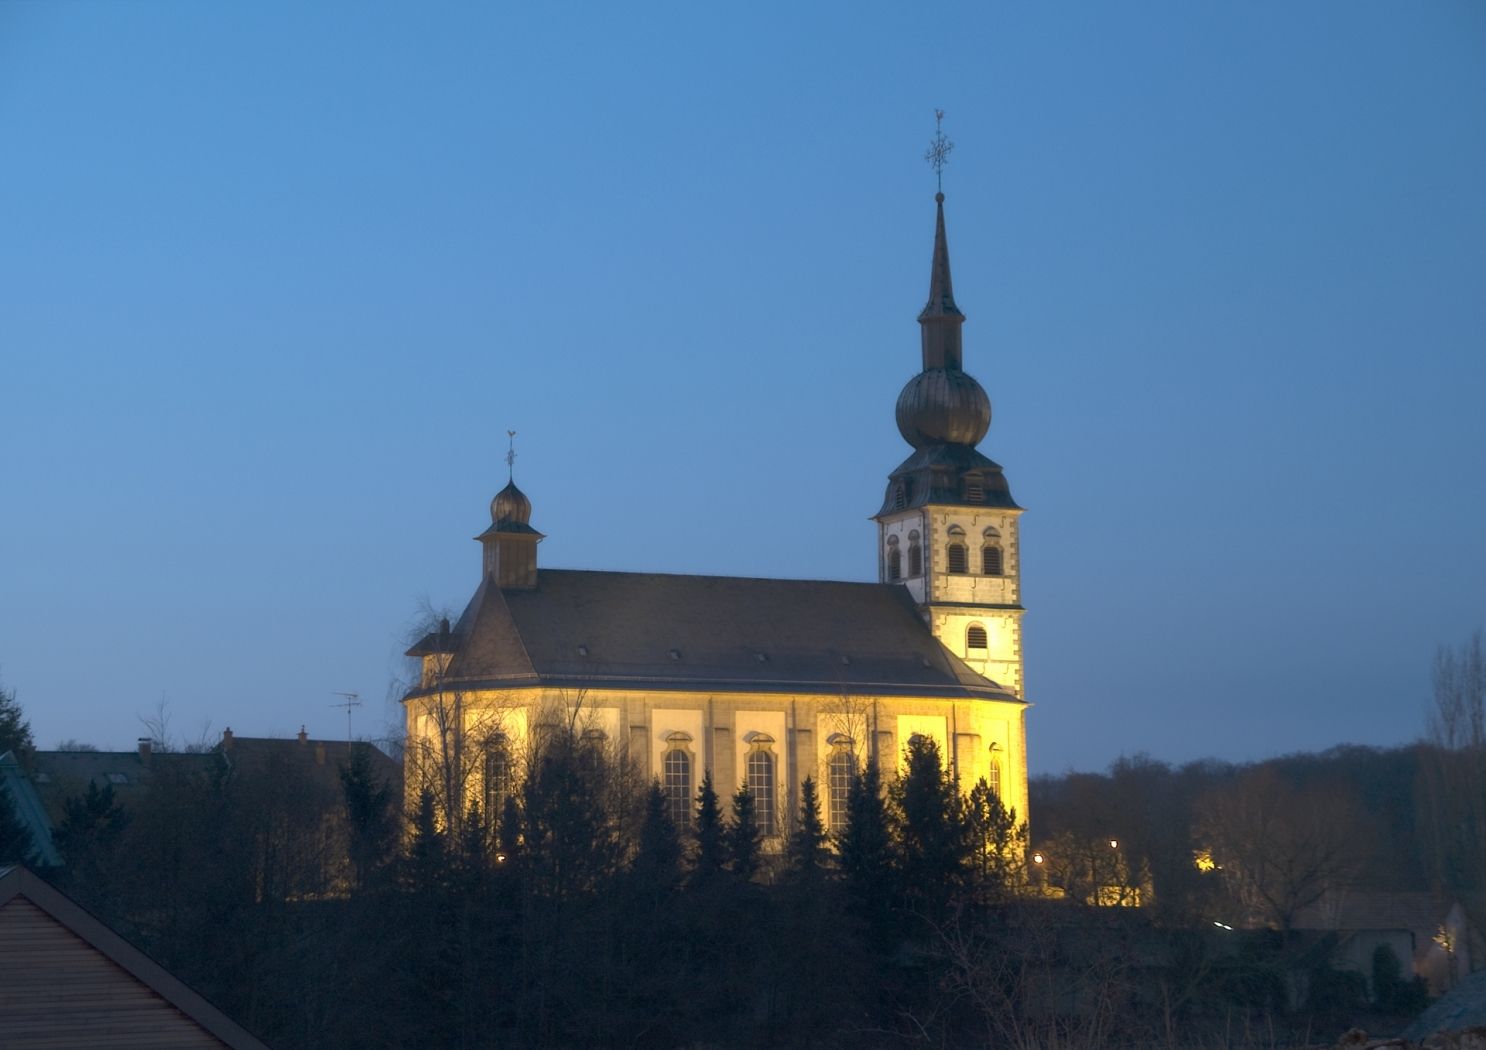 Eglise St. Remy Koerich